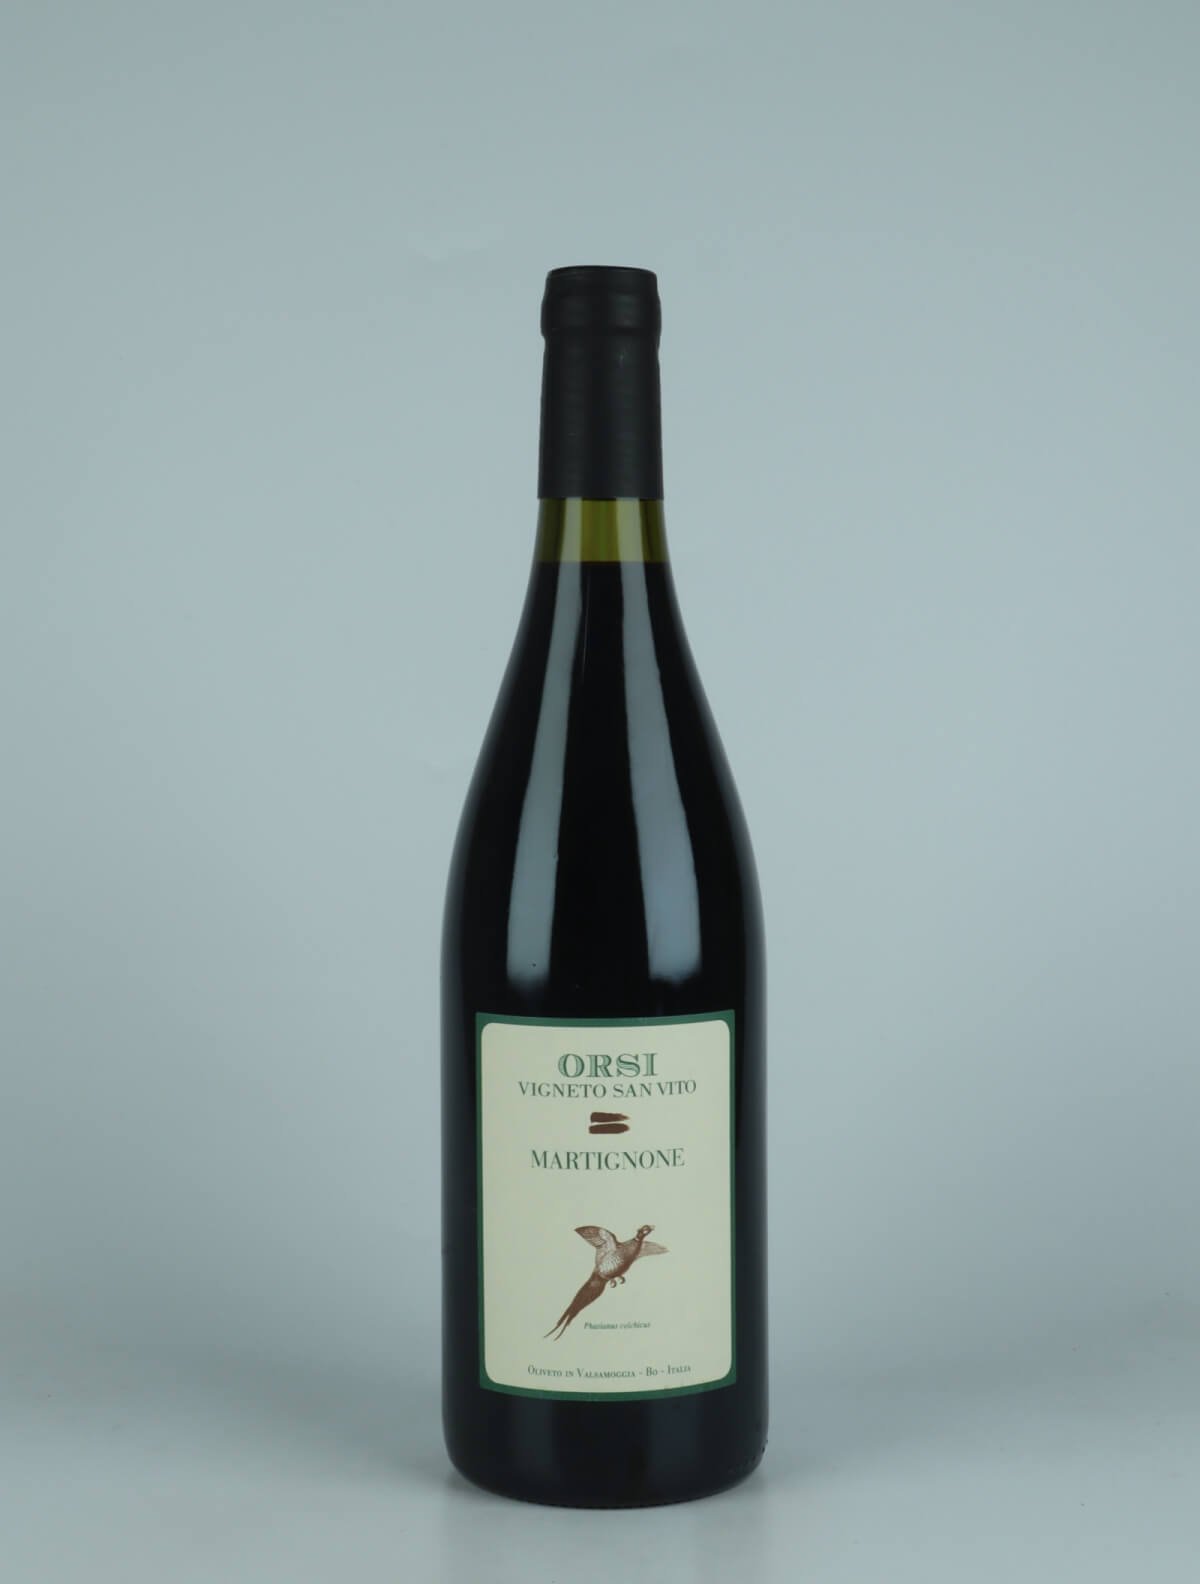 En flaske 2021 Martignone Rødvin fra Orsi - San Vito, Emilia-Romagna i Italien